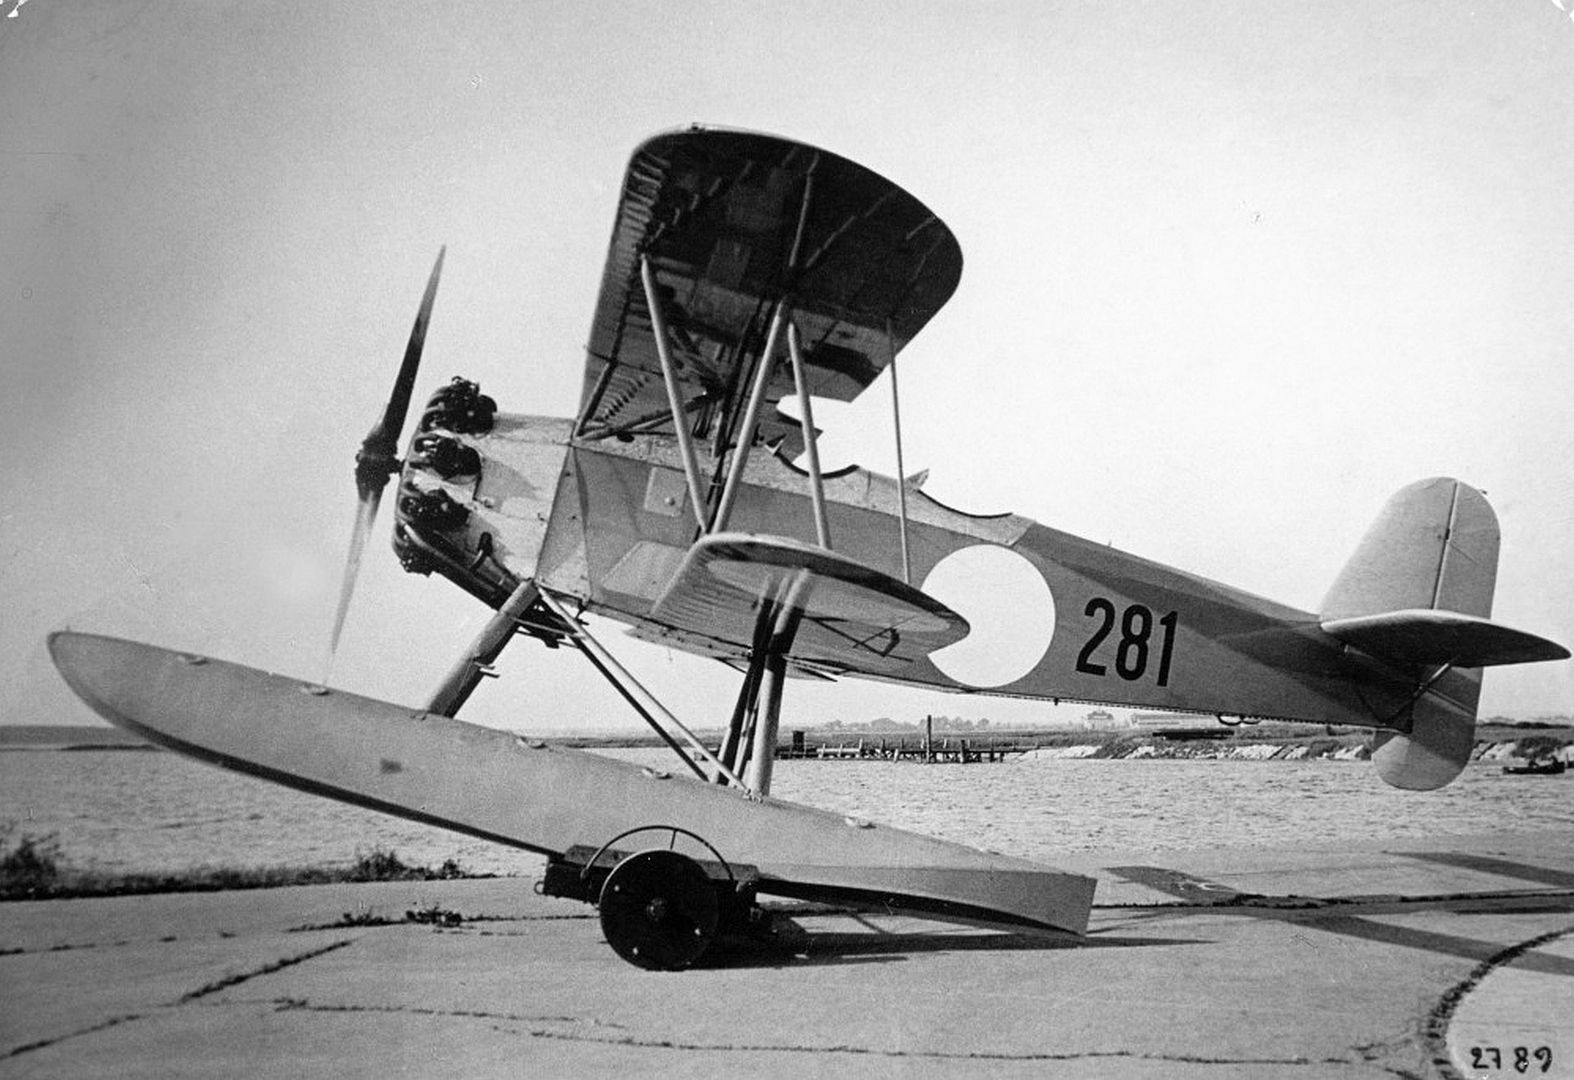 Heinkel HD 19a WNr 296 For Sweden 2nd Built